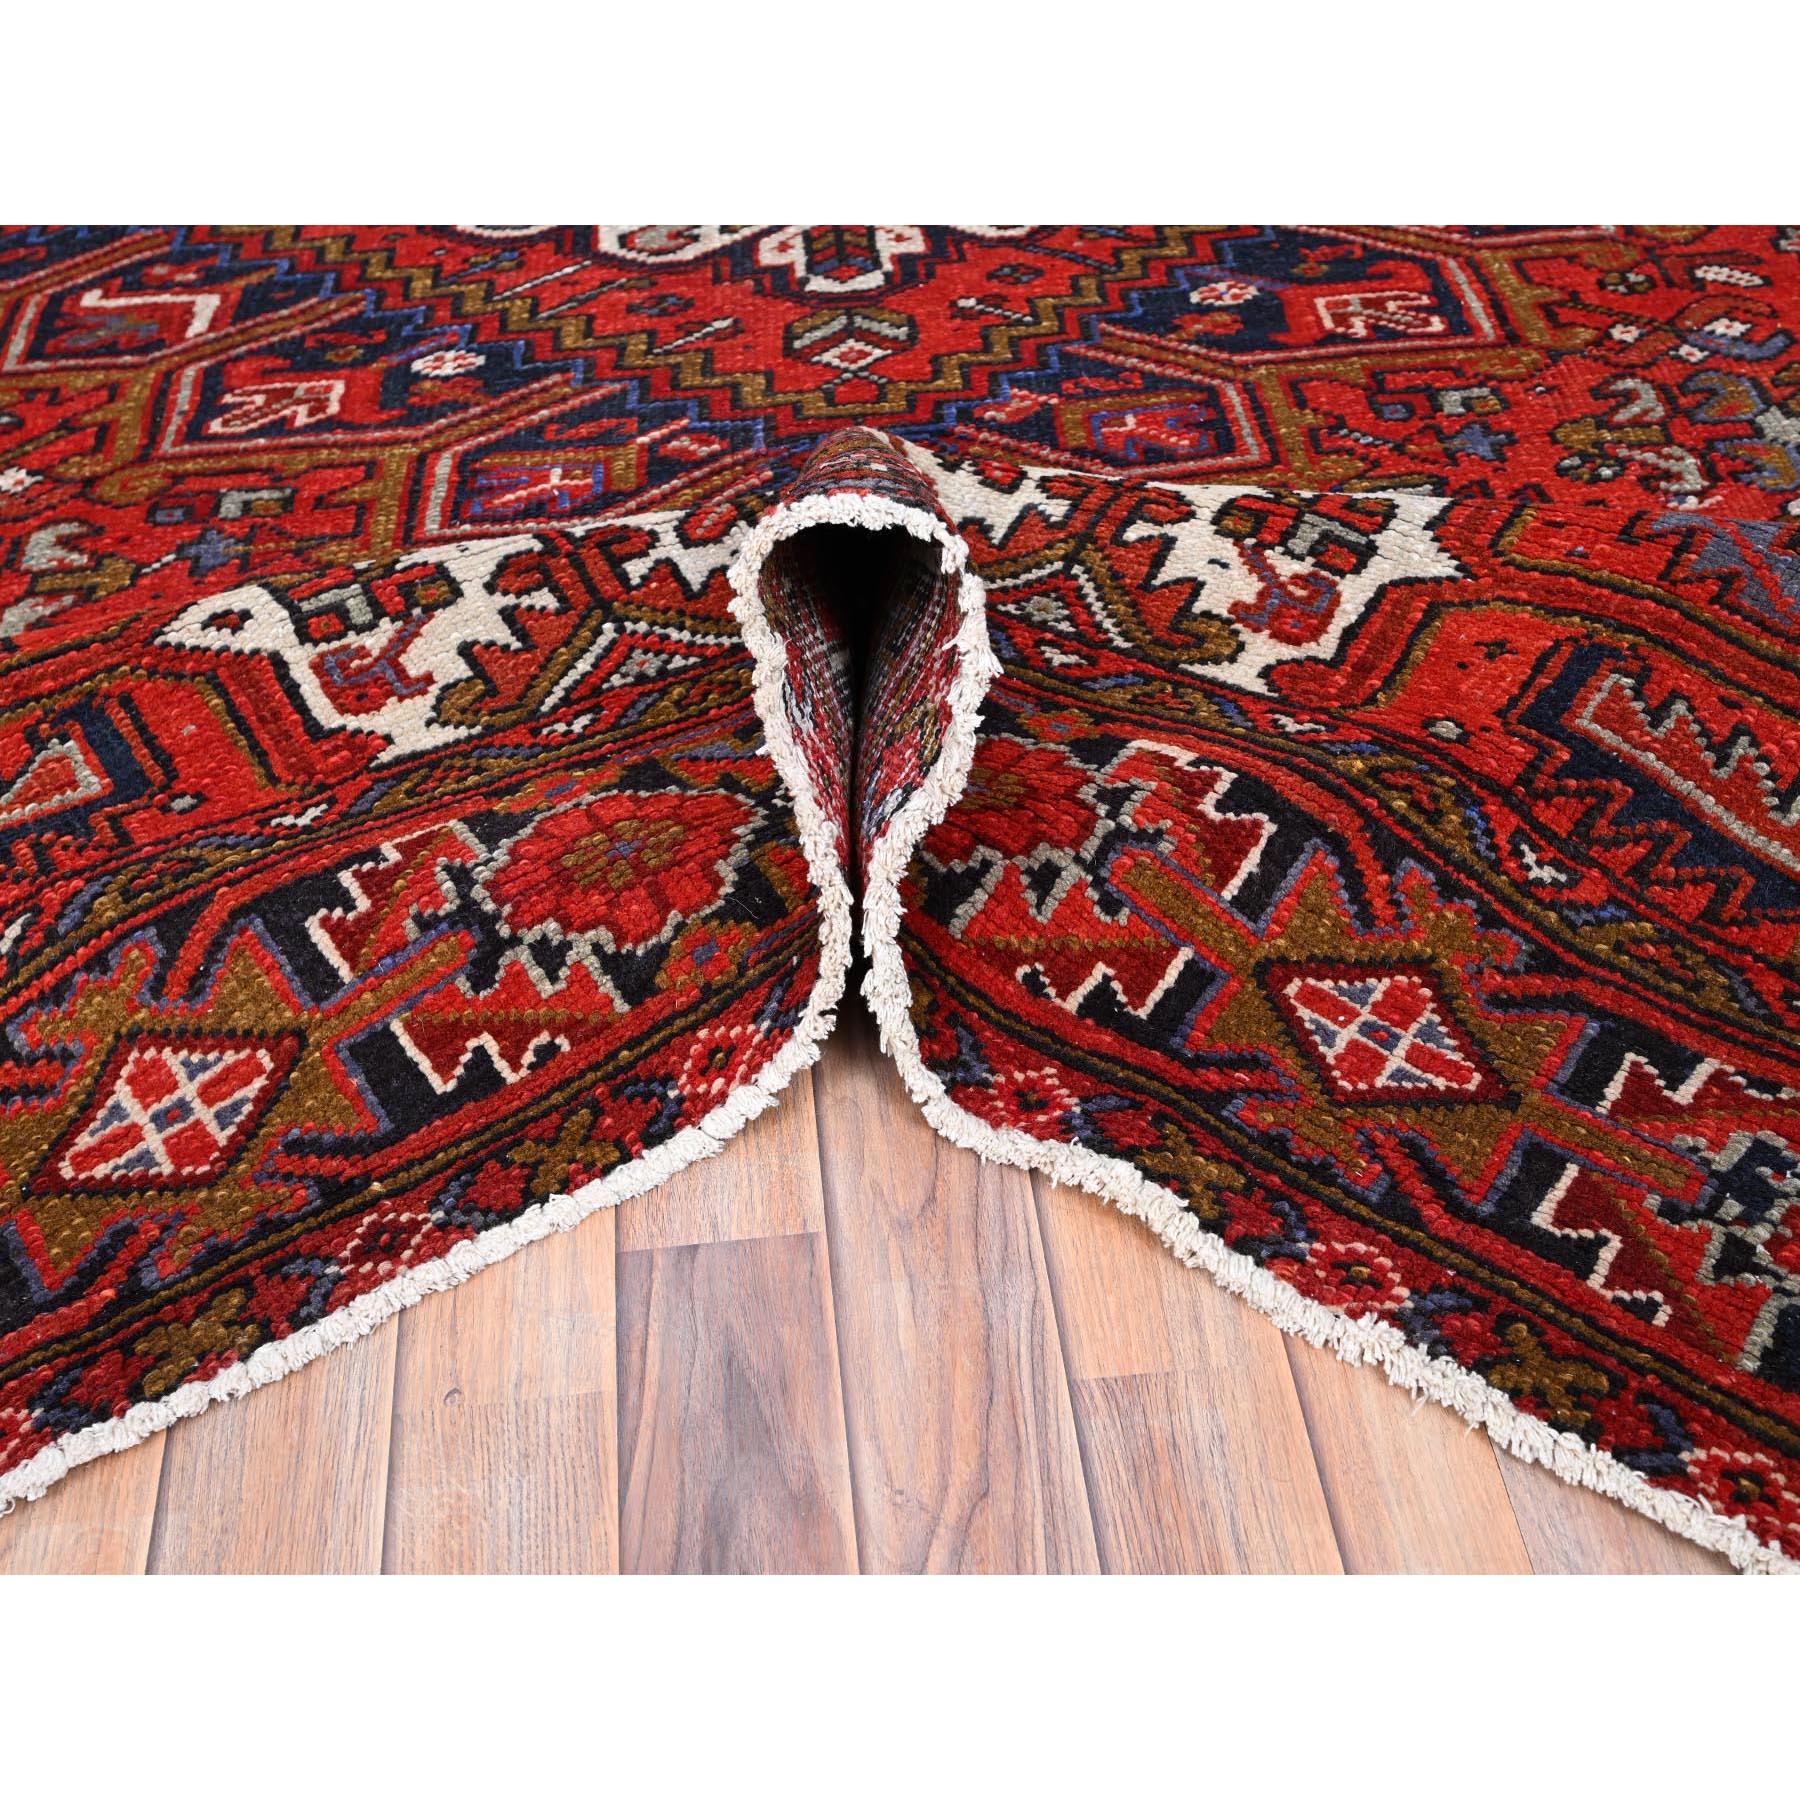 7'9"x11' Raspberry Red, Worn Wool, Hand Woven, Semi Antique Persian Heriz with Geometric Pattern, Good Condition, Rustic Feel, Oriental Rug 